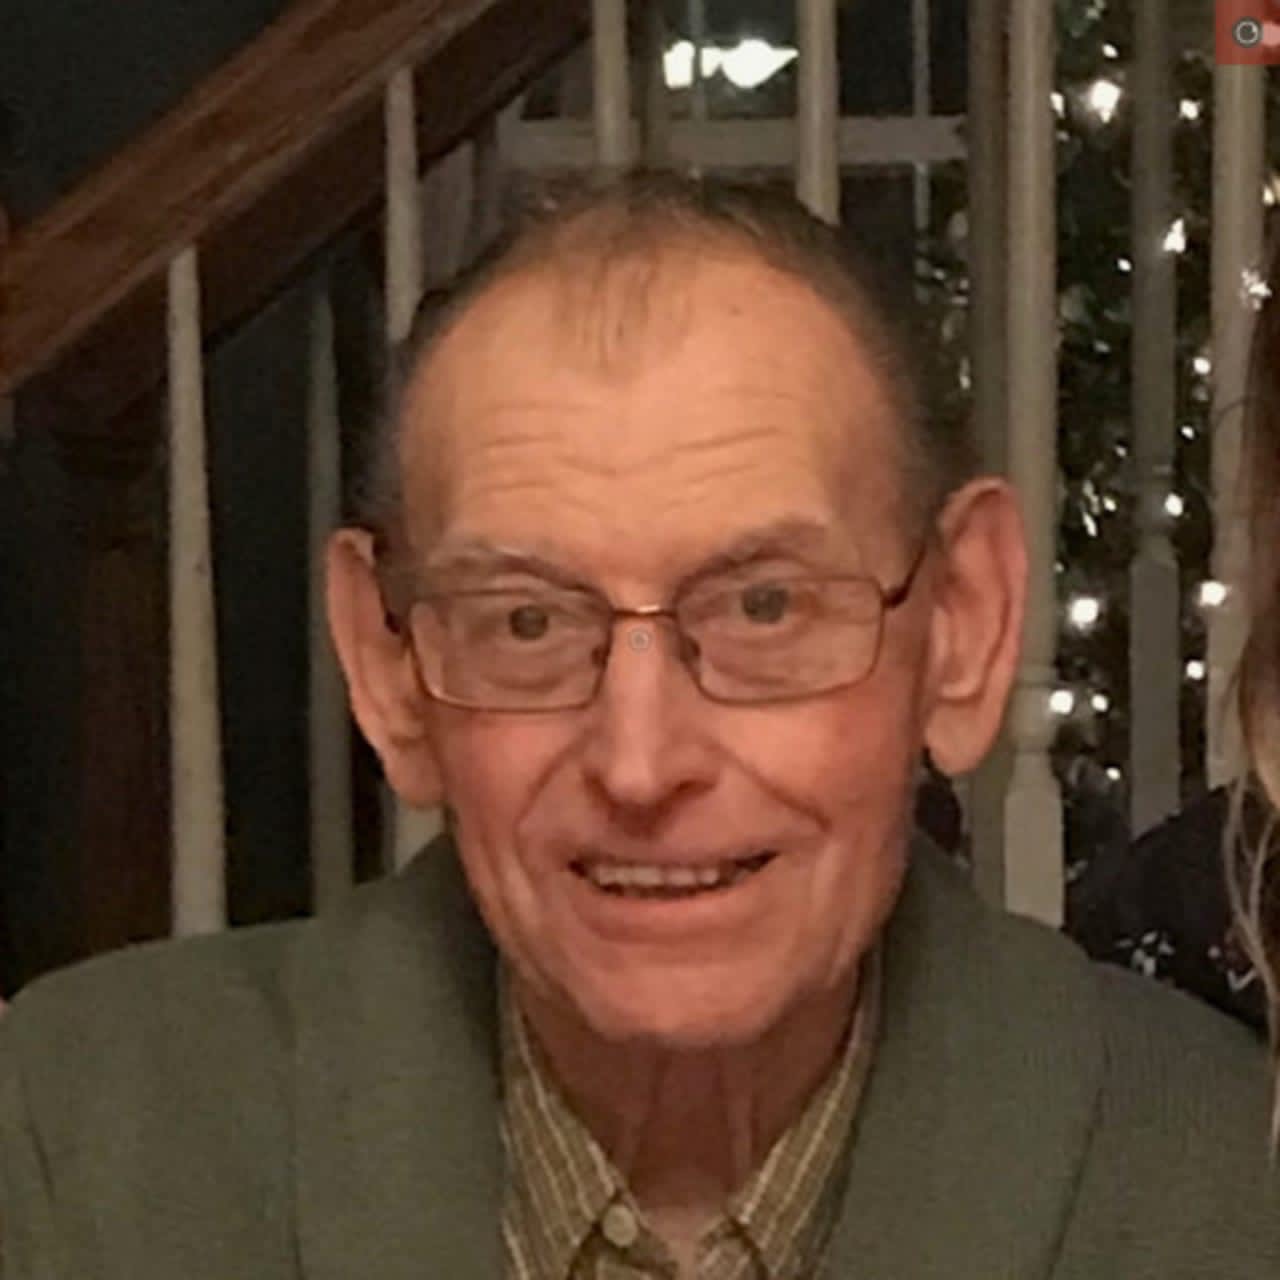 Walter Smith, 81